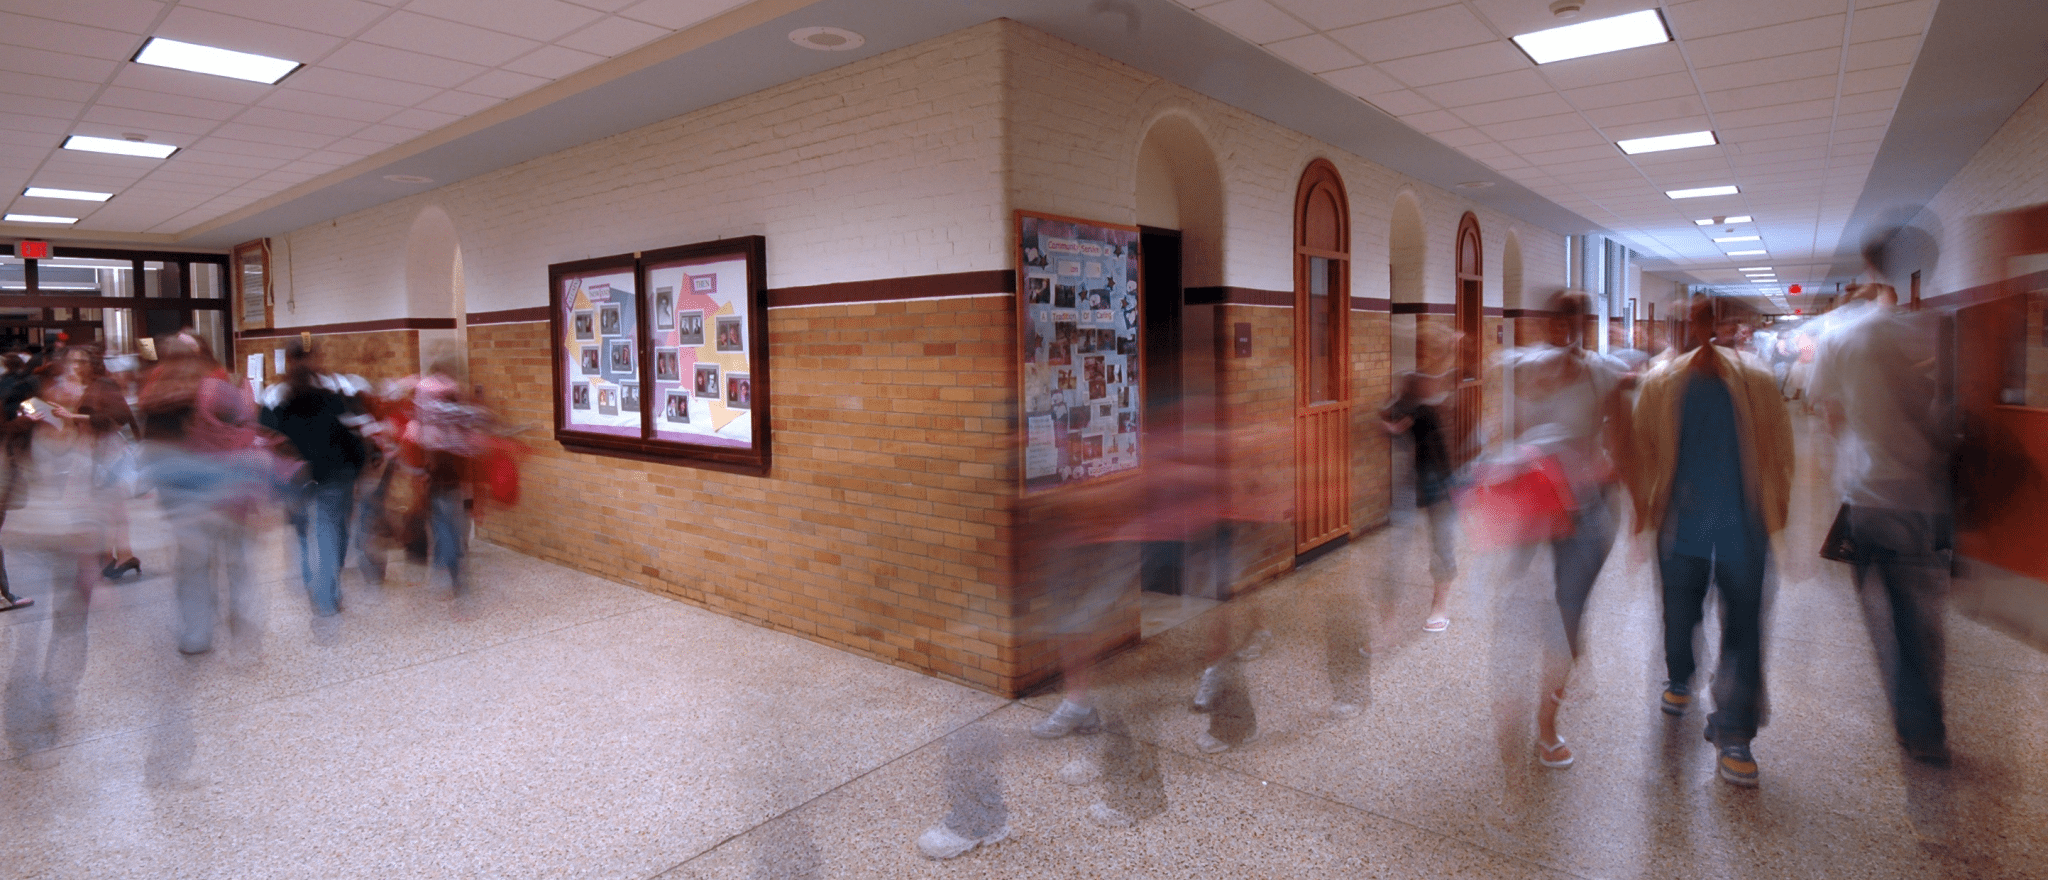 School Hallway - Students